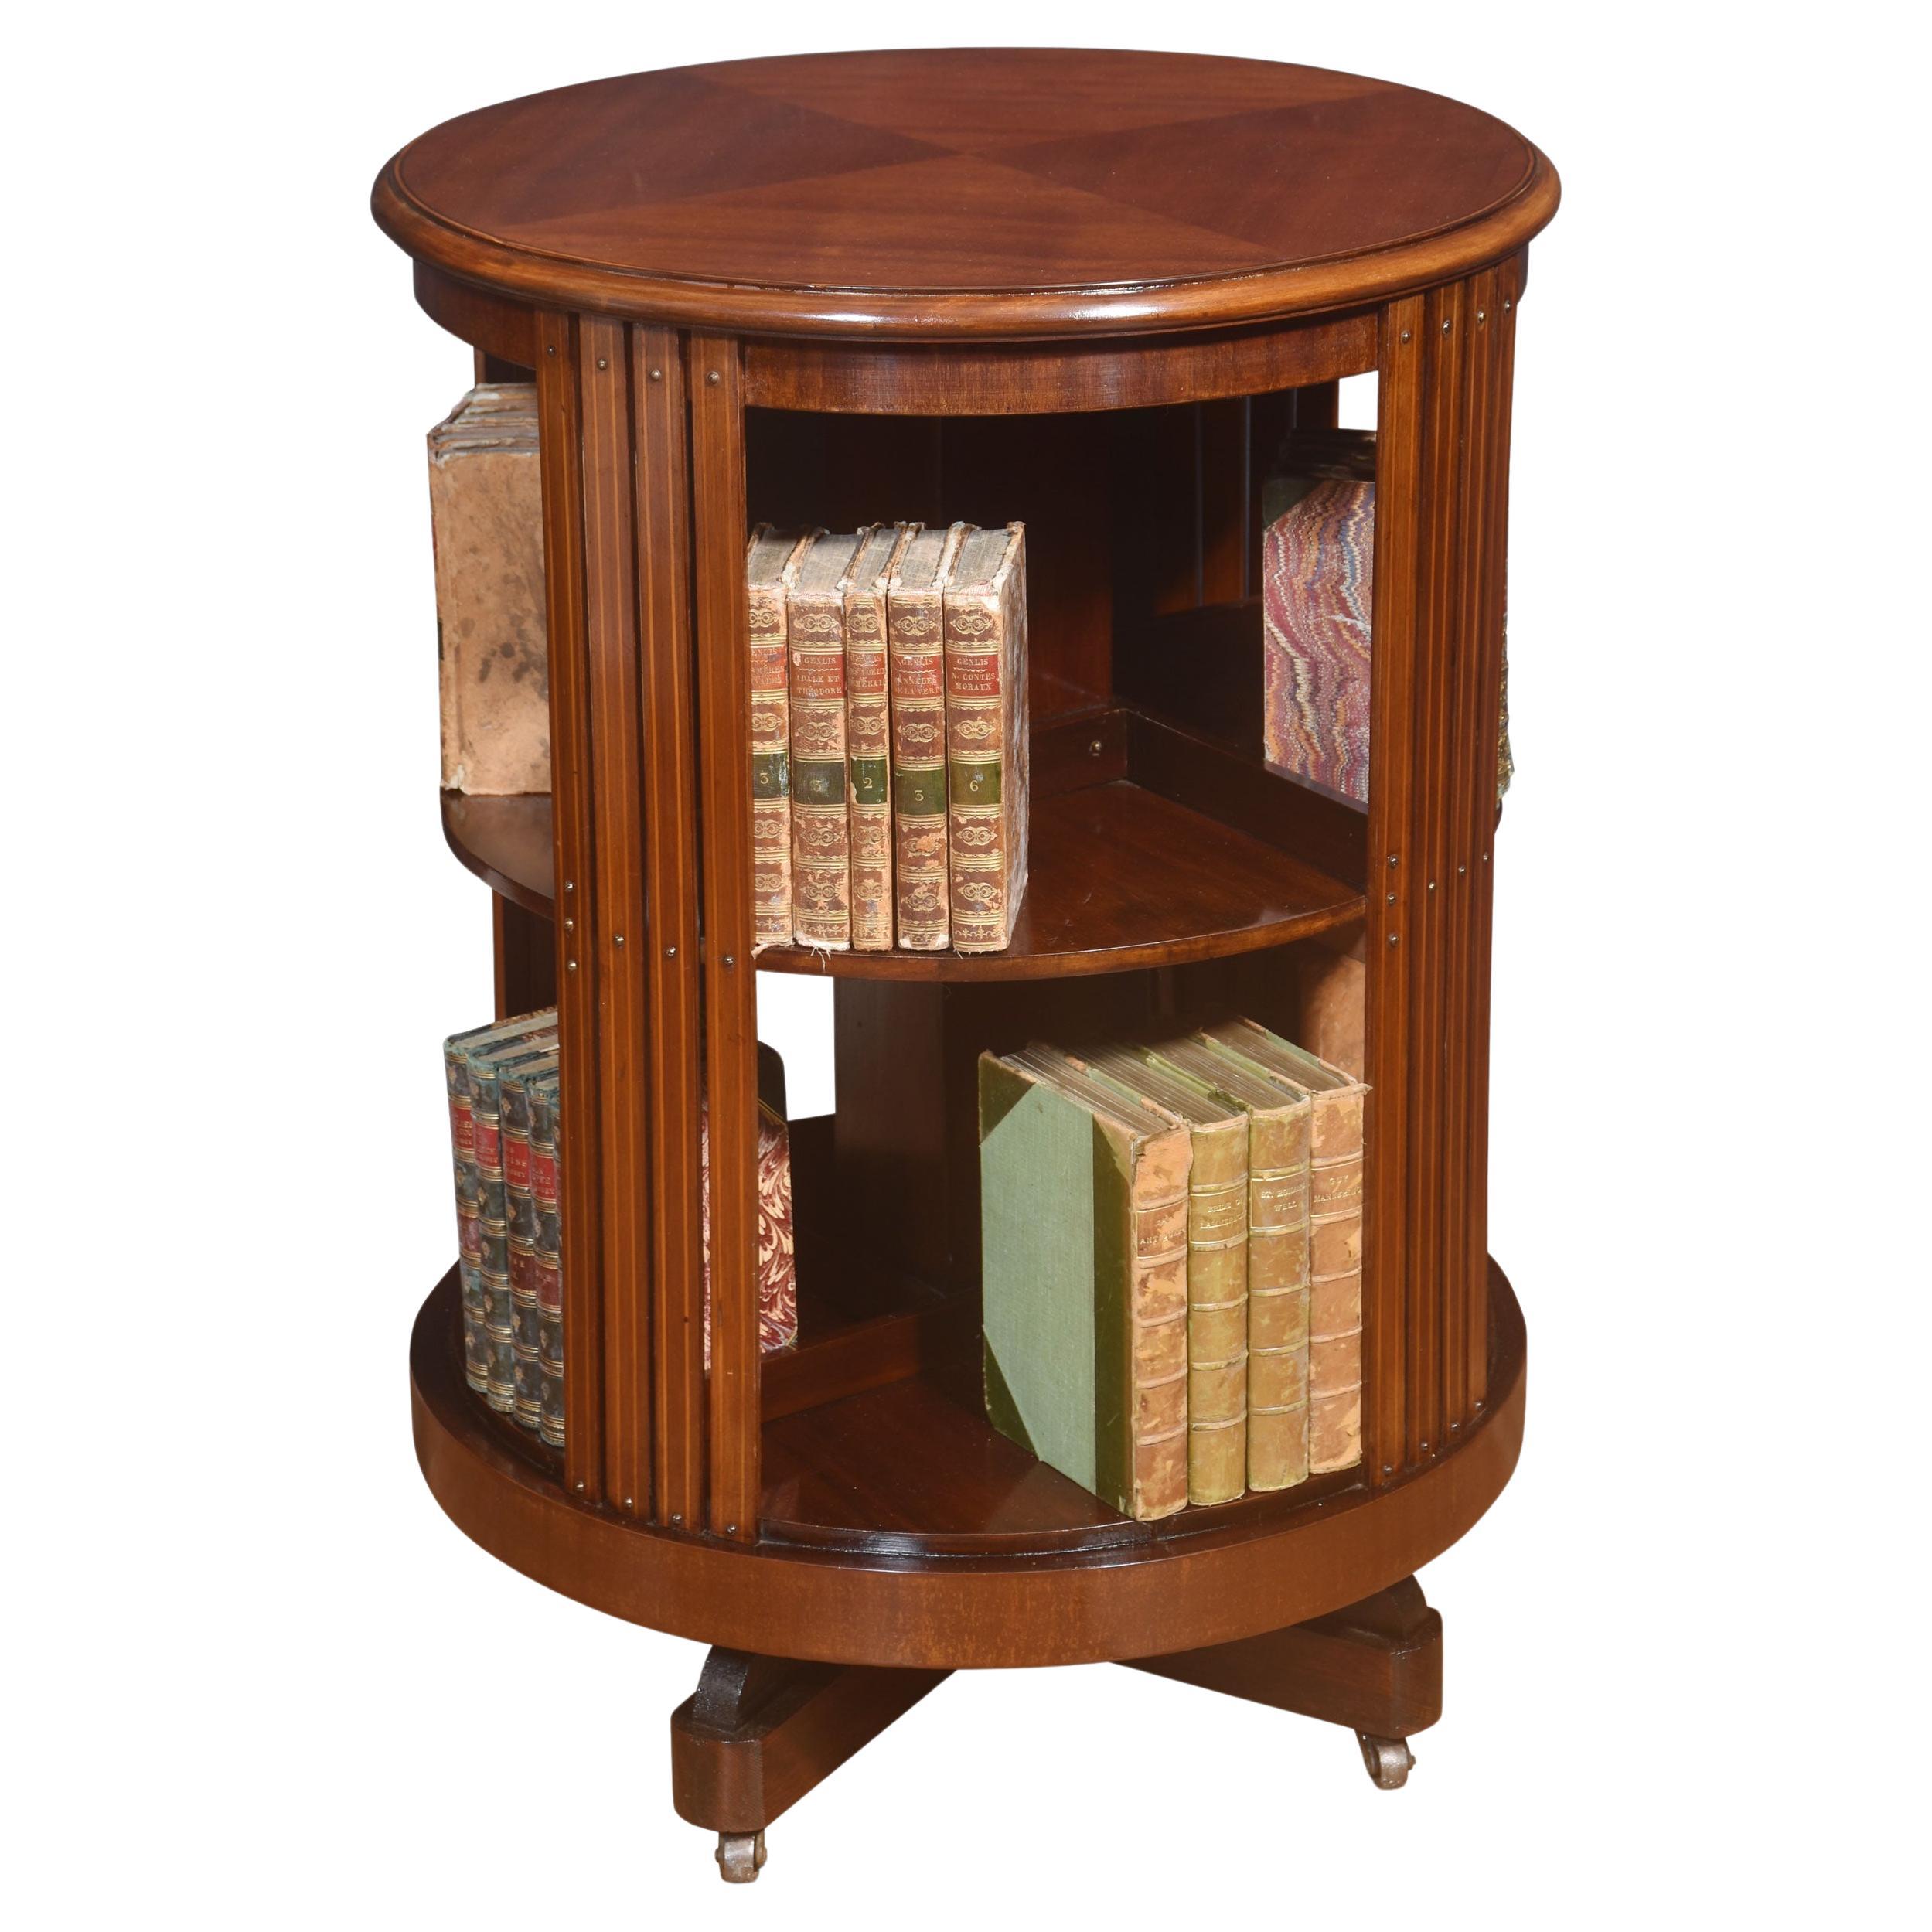 Circular mahogany revolving bookcase